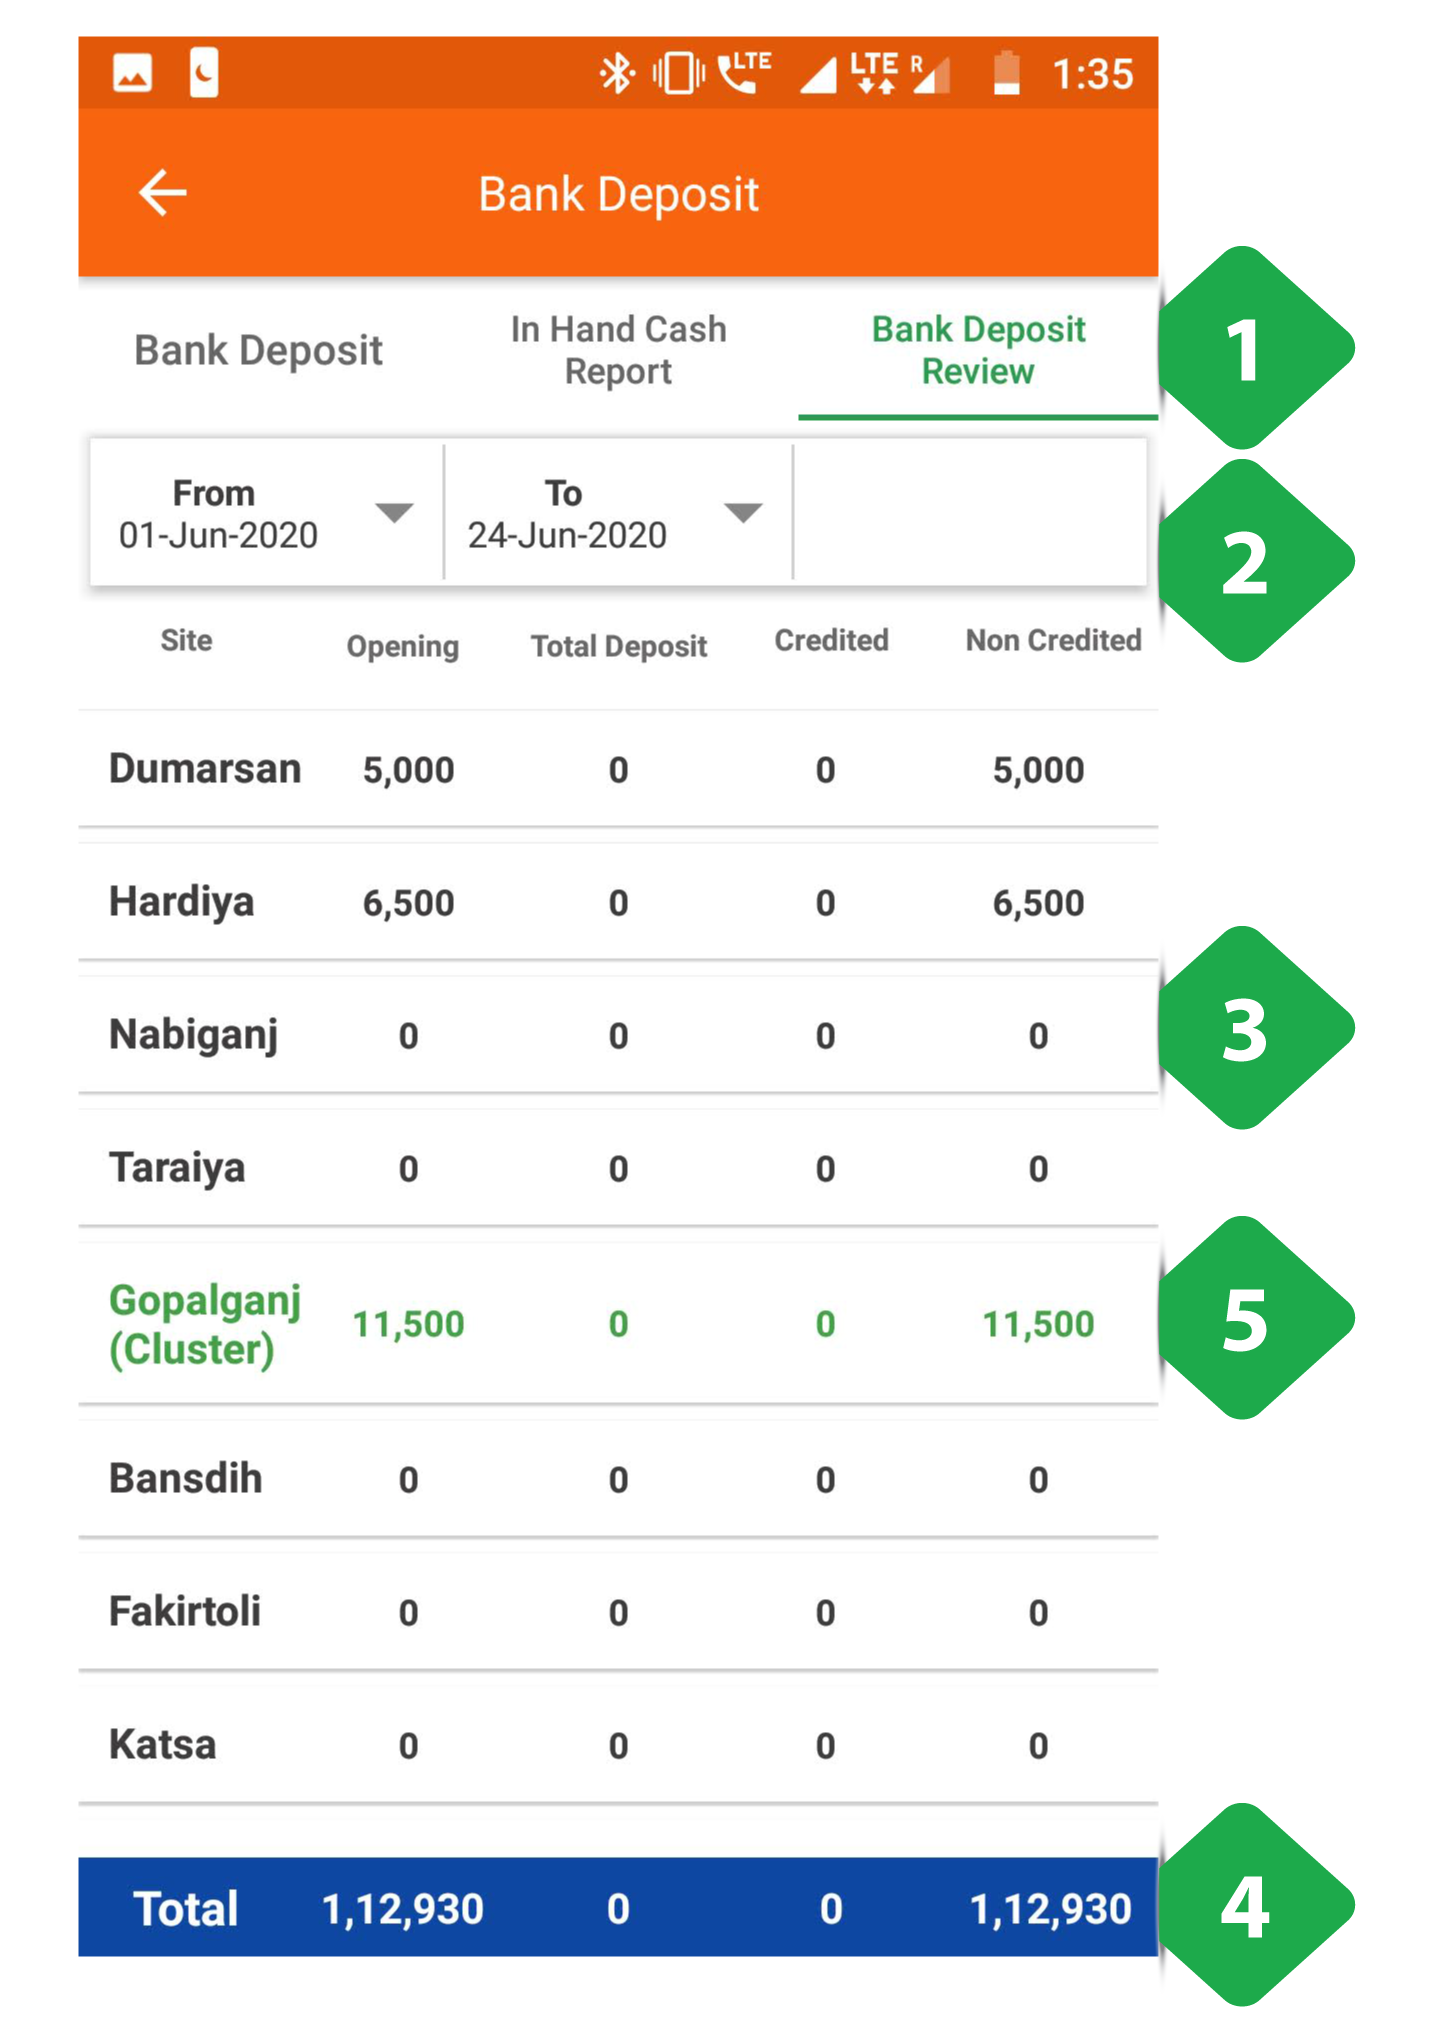 Bank Deposit Review tab